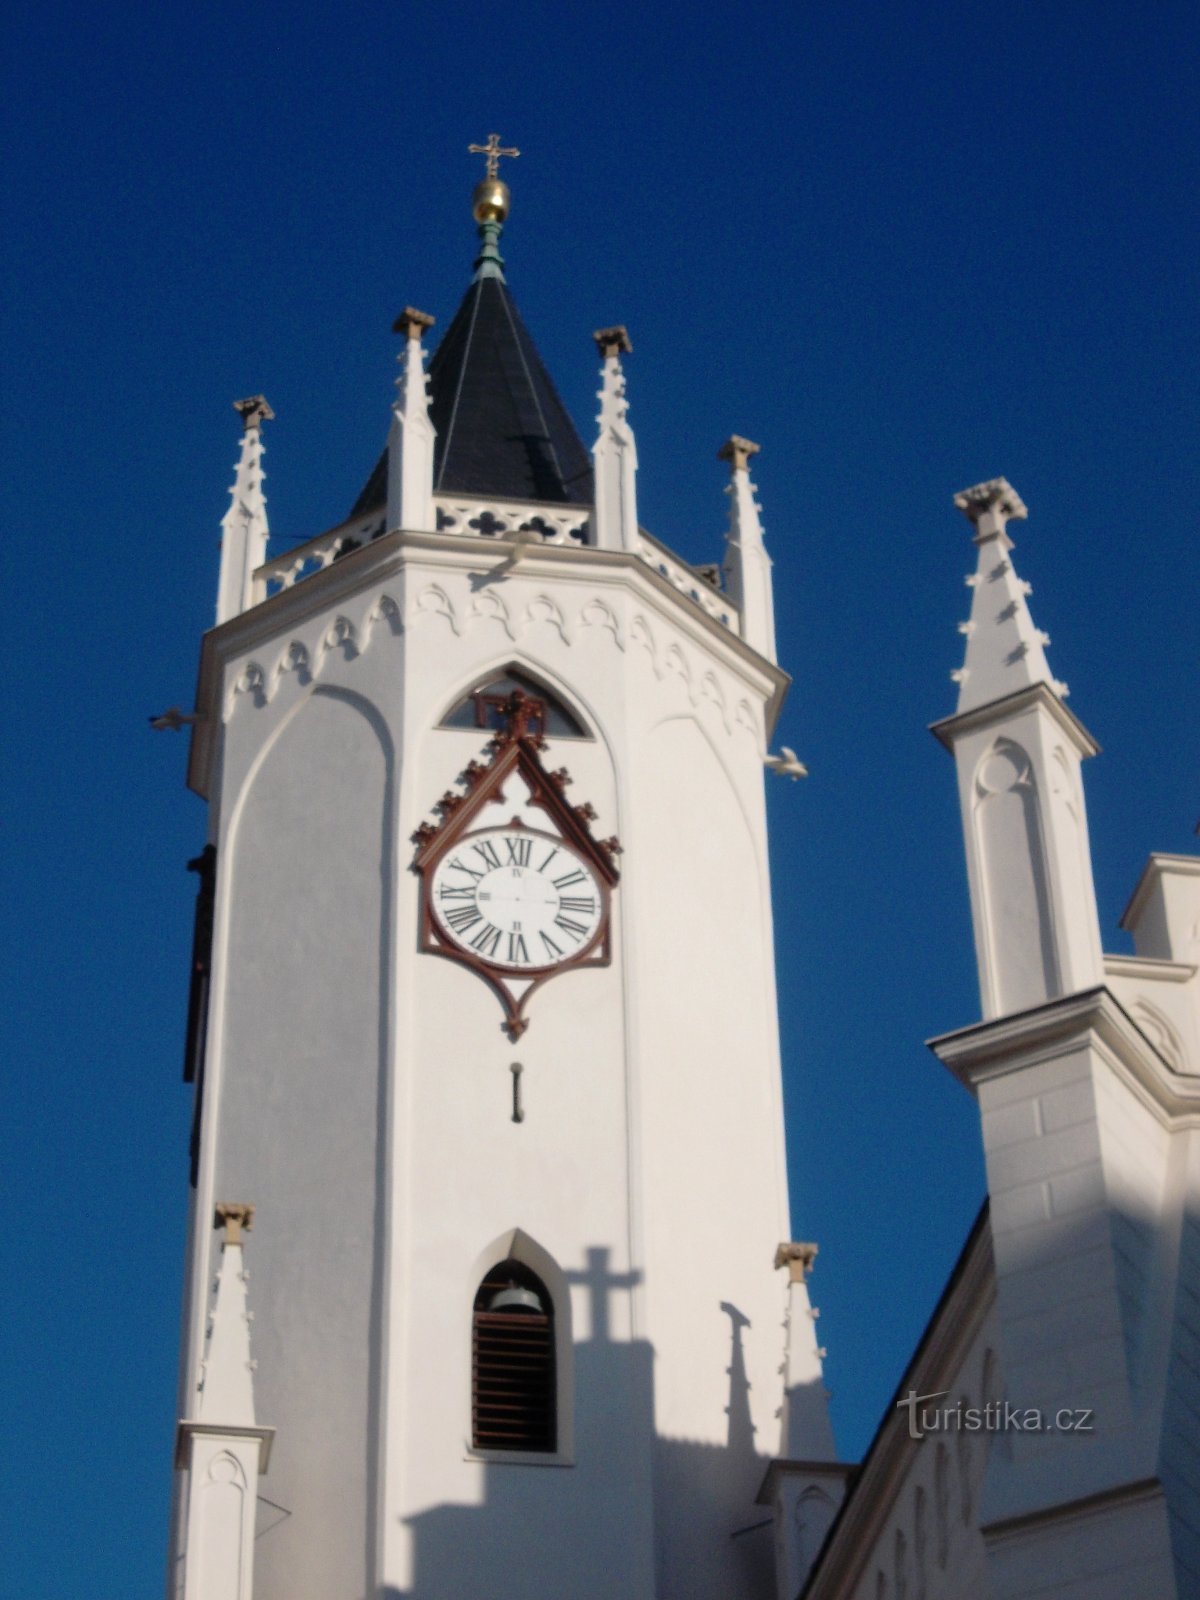 torre do relógio da igreja